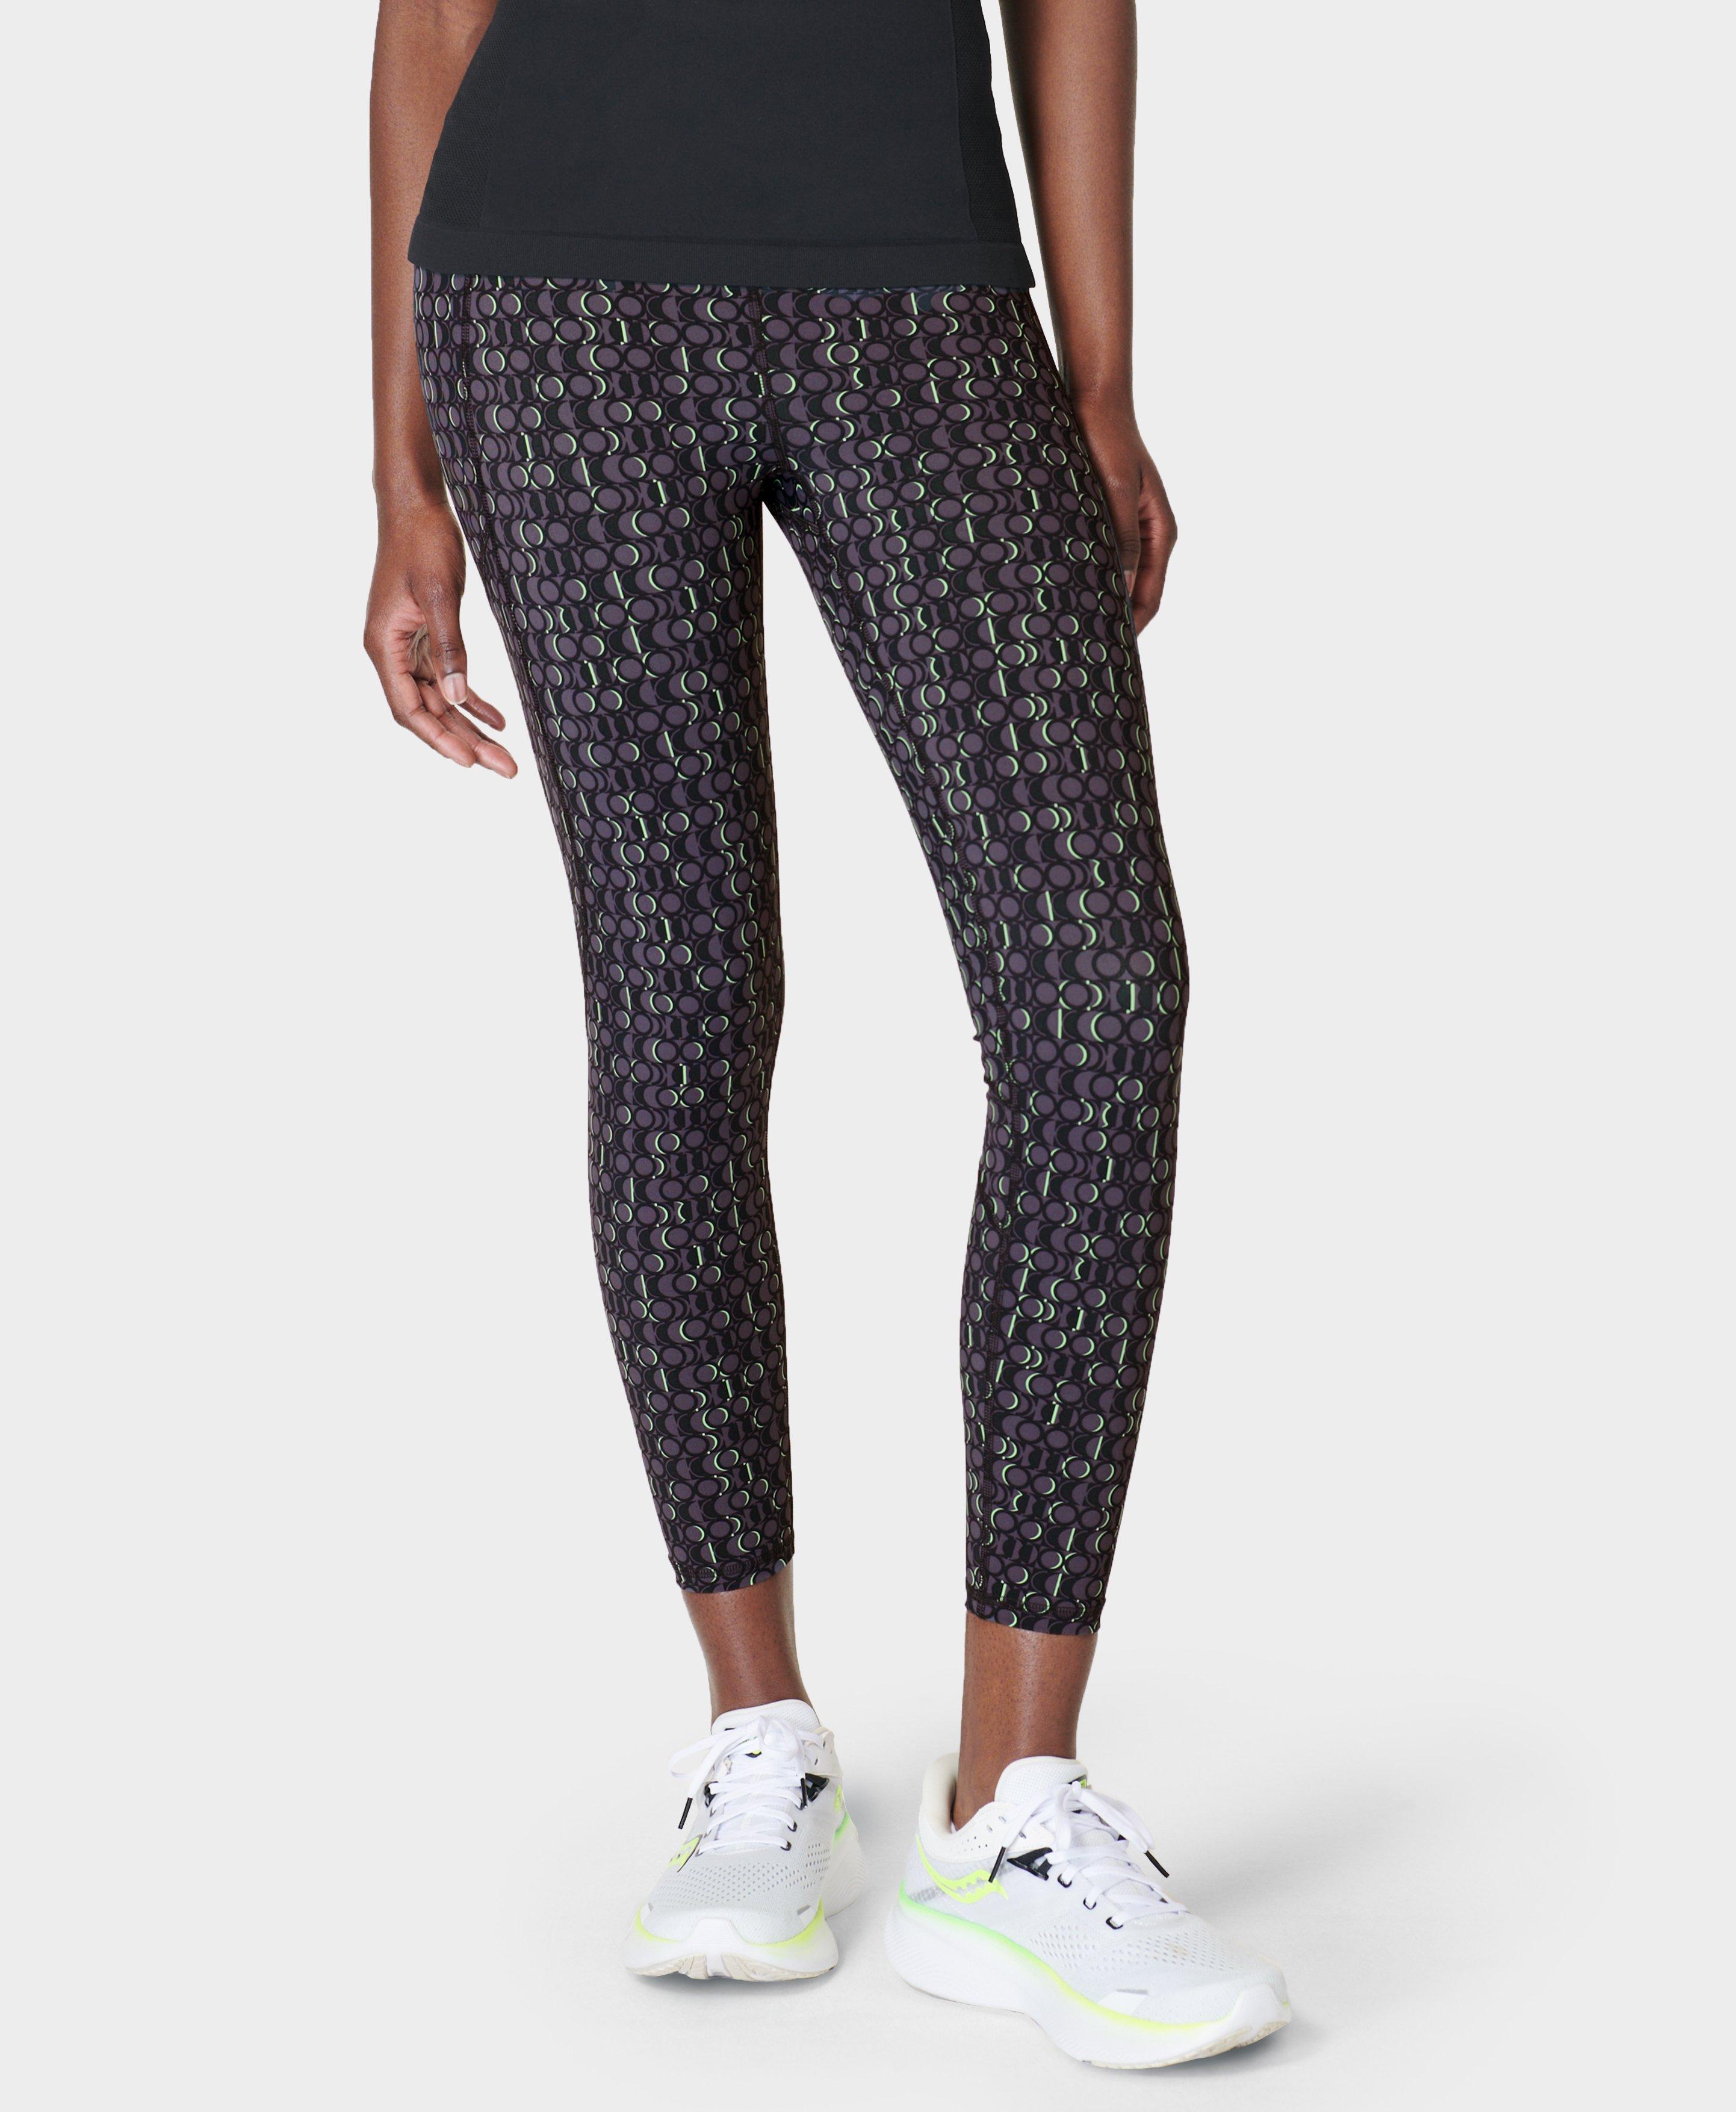 Sweaty Betty Zero Gravity Pocket 7/8 Running Leggings - ShopStyle  Activewear Pants